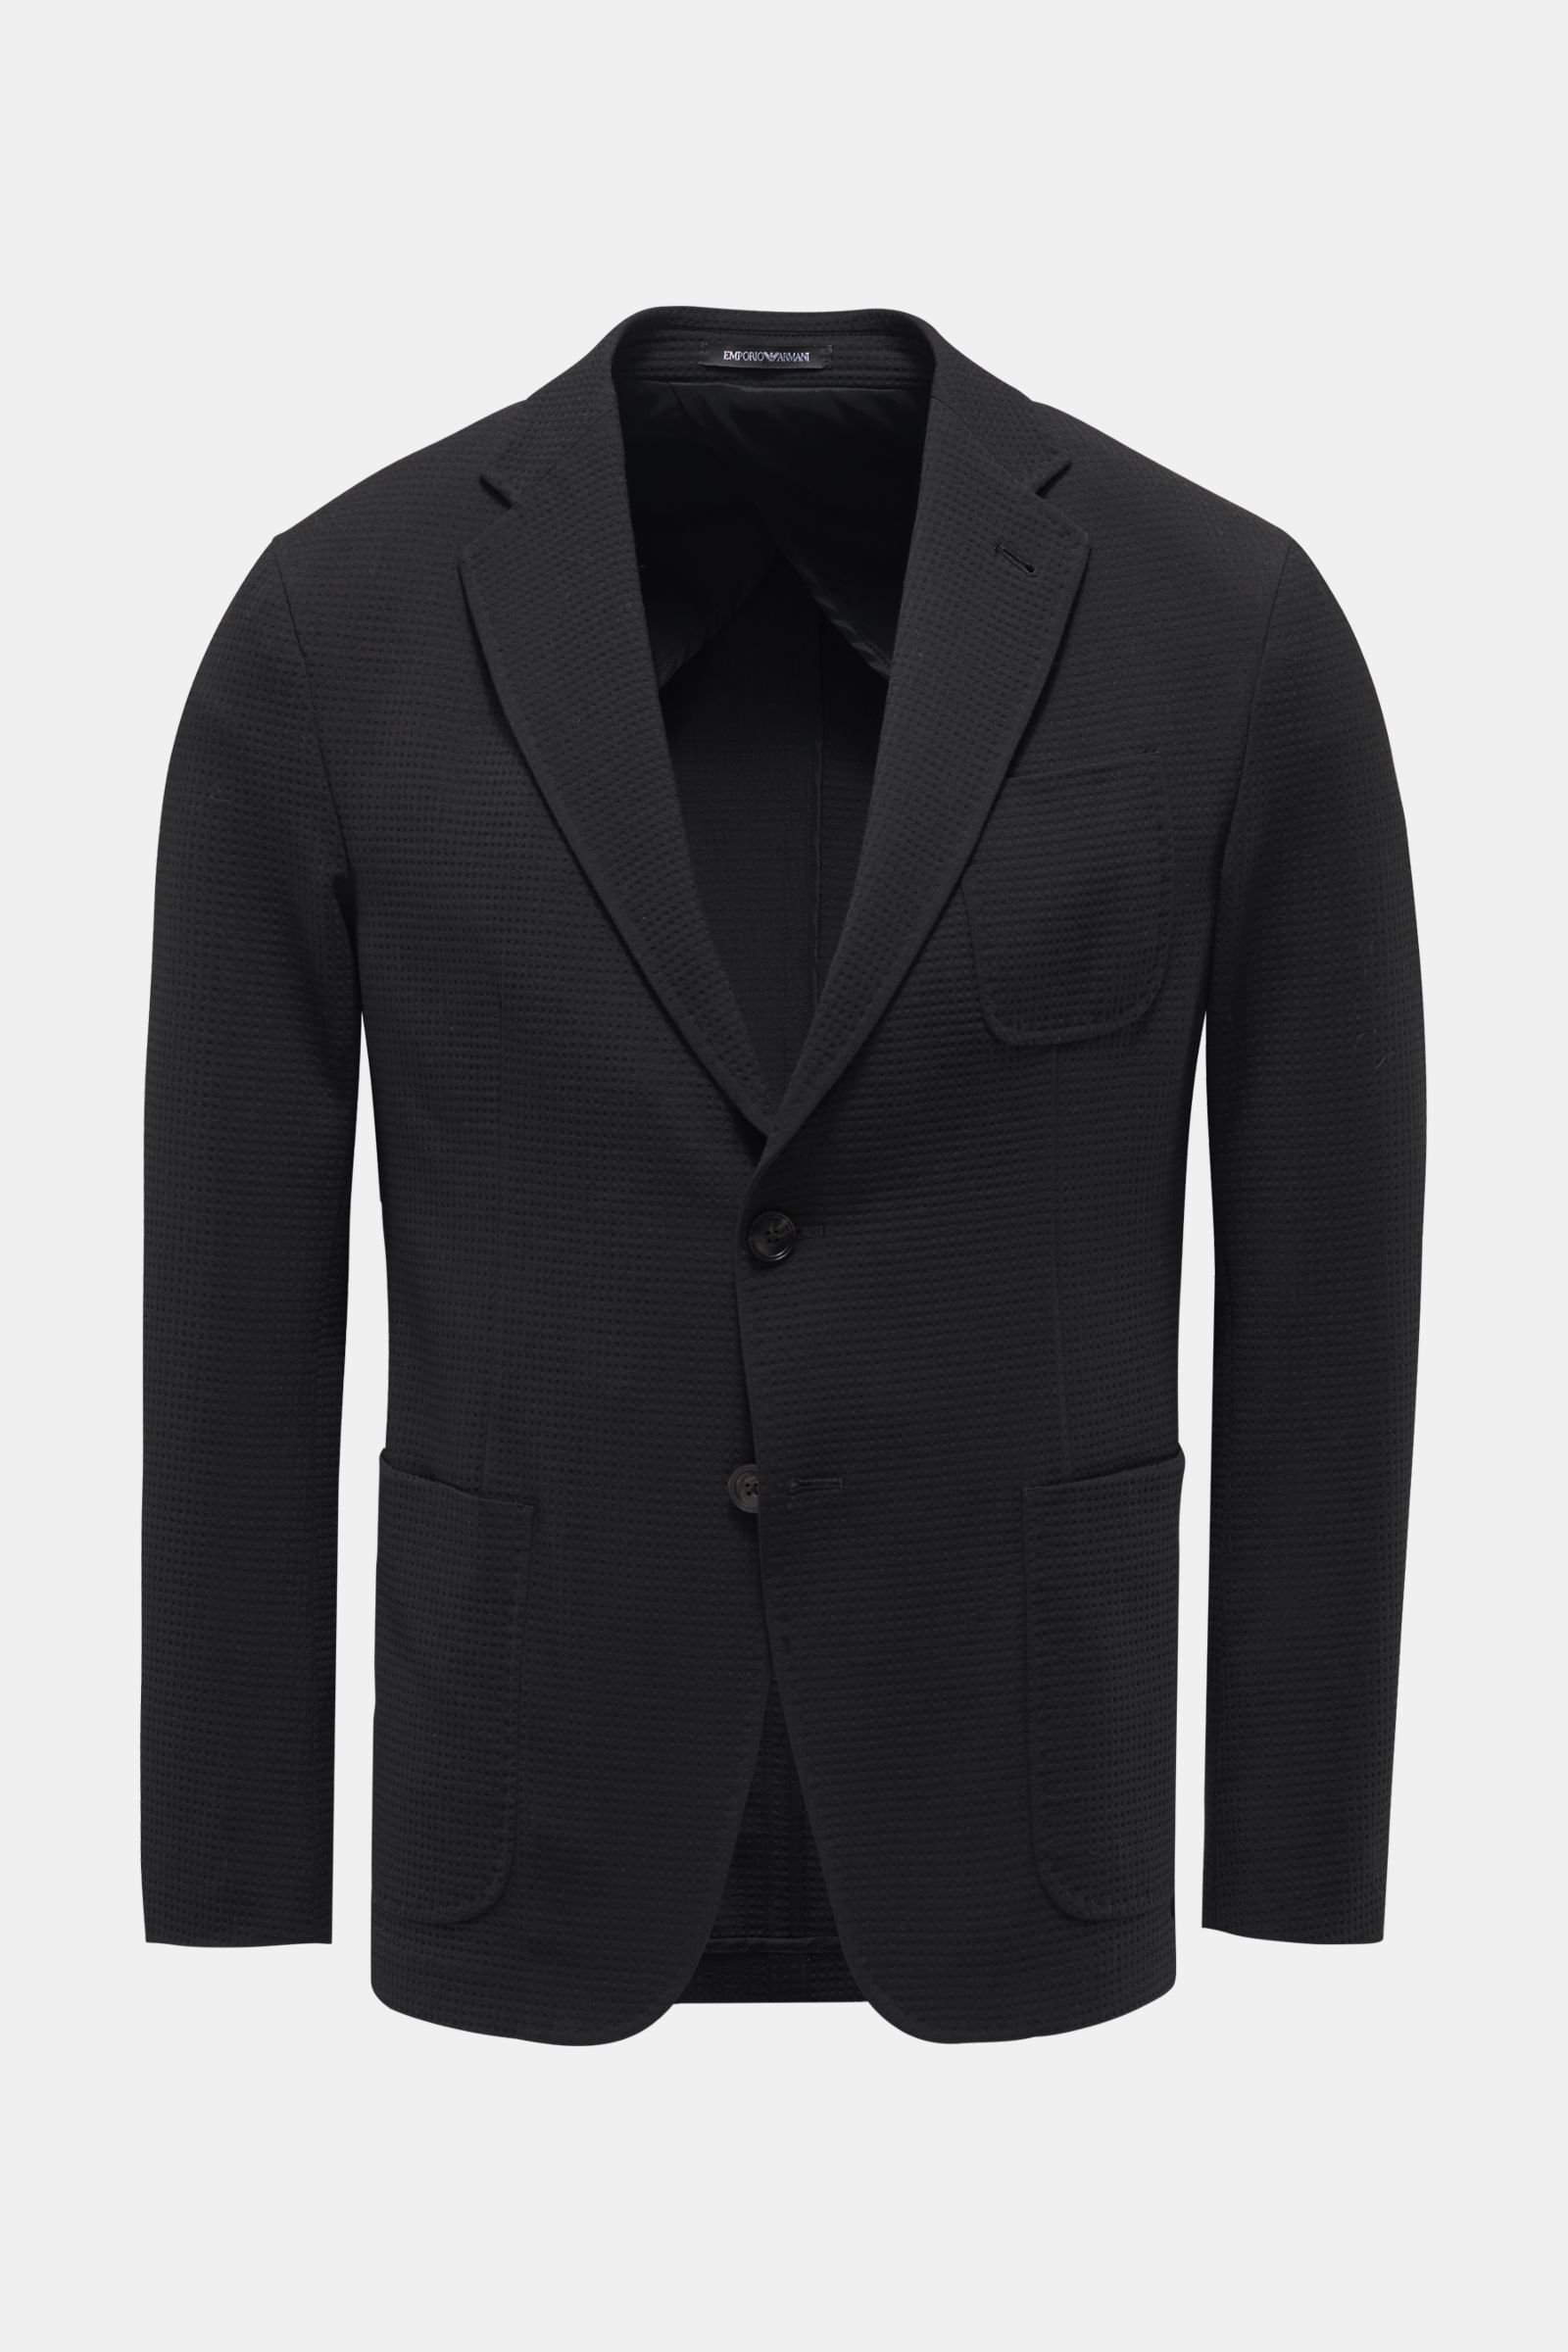 Smart-casual jacket black 